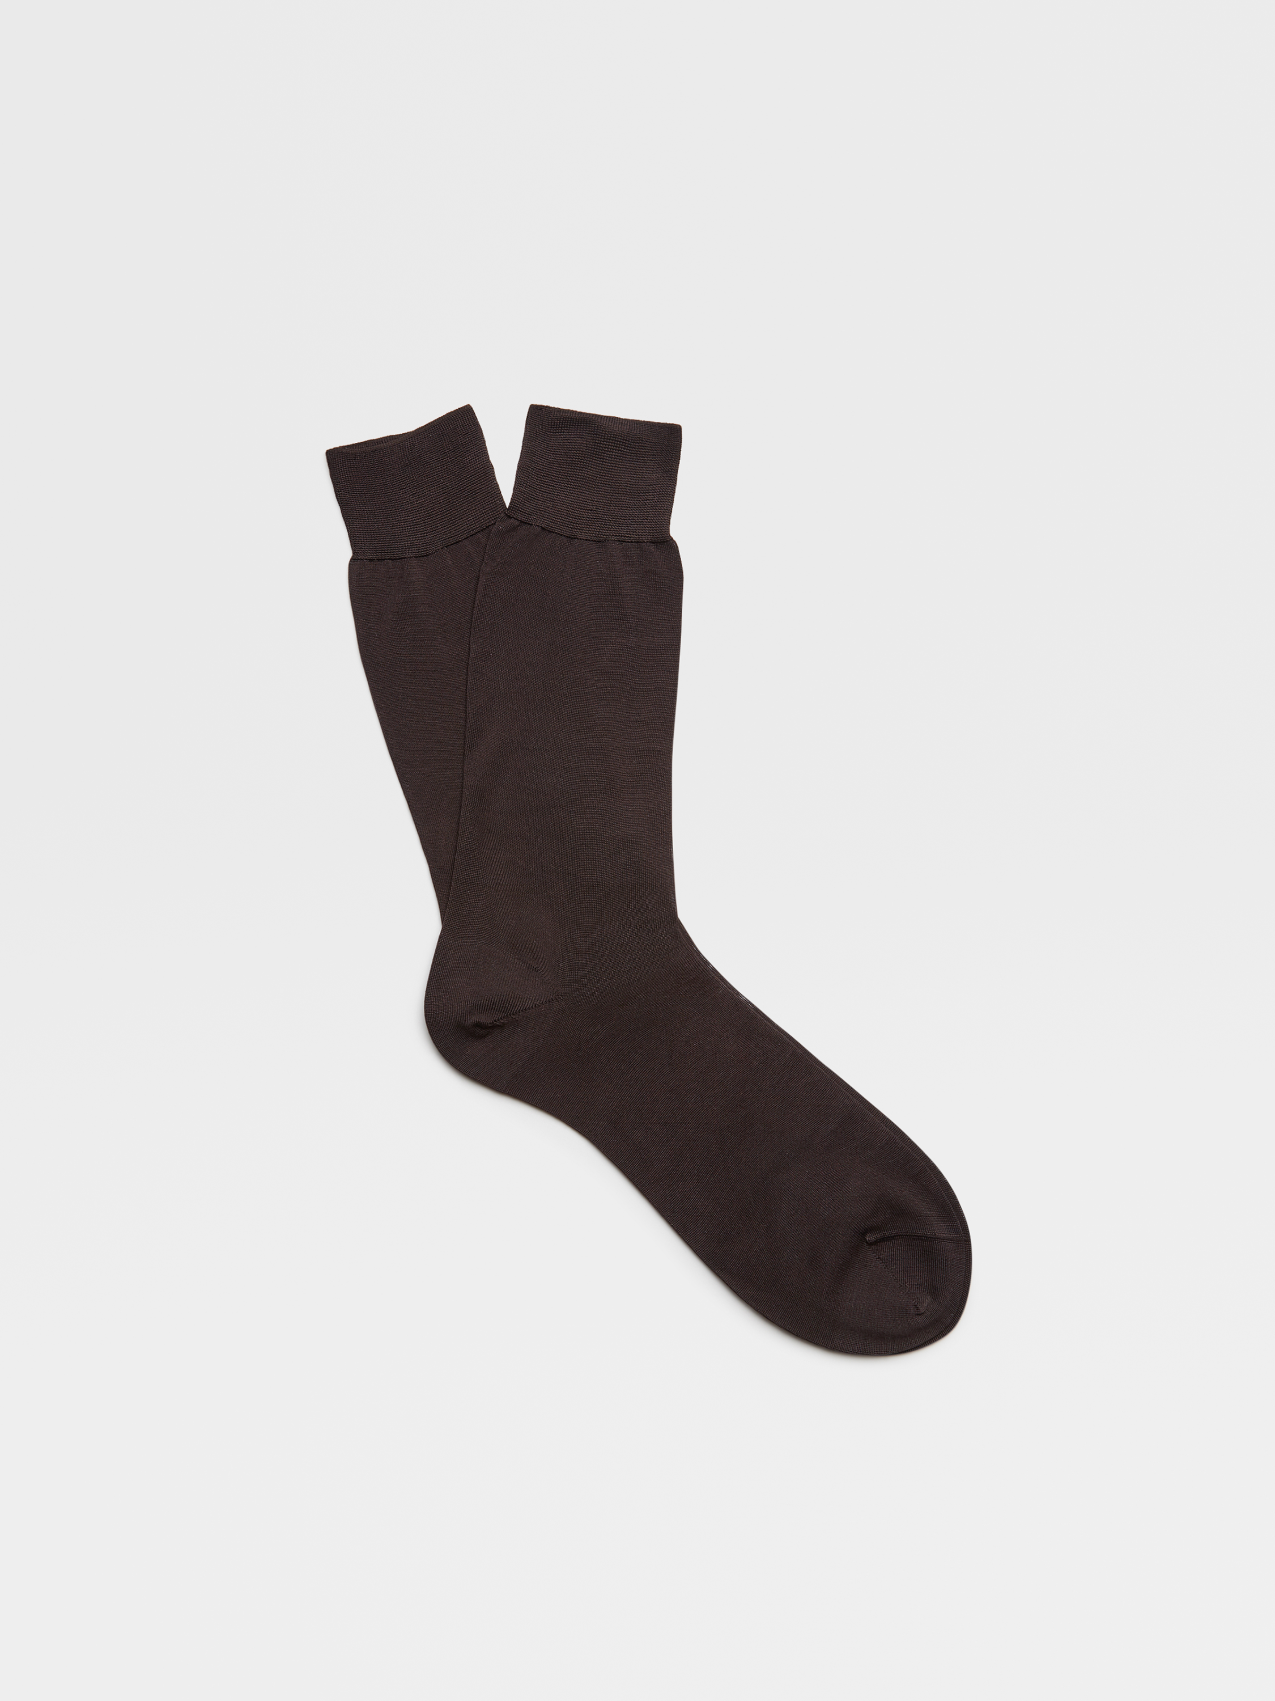 Plain Brown Cotton Mid Calf Socks